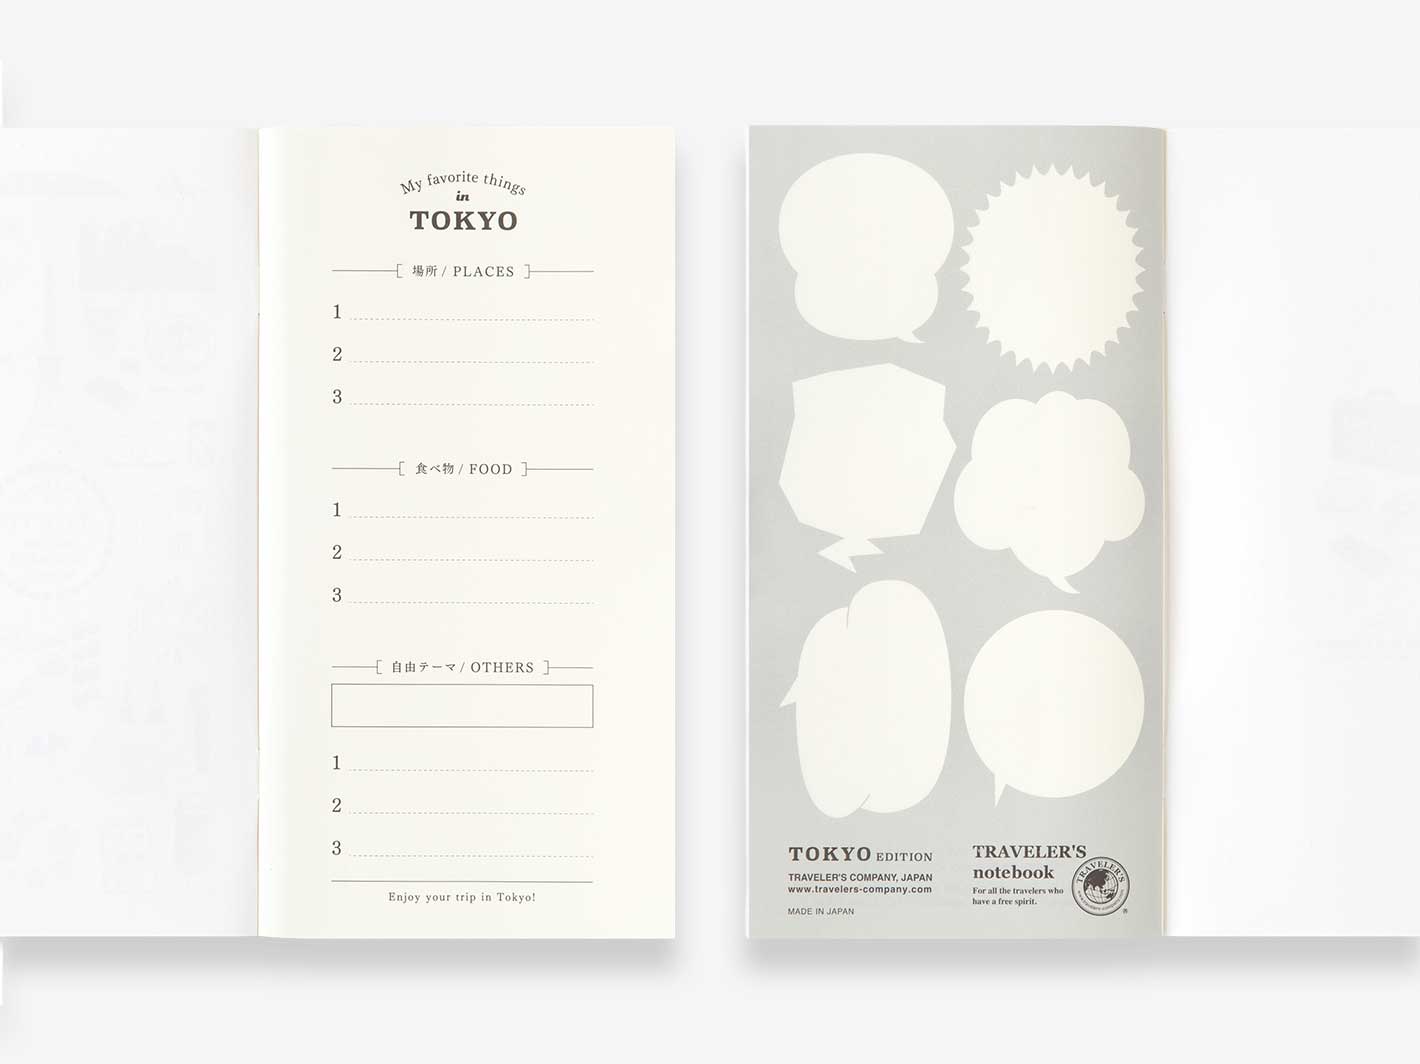 TRAVELER'S notebook Refill TOKYO Edition